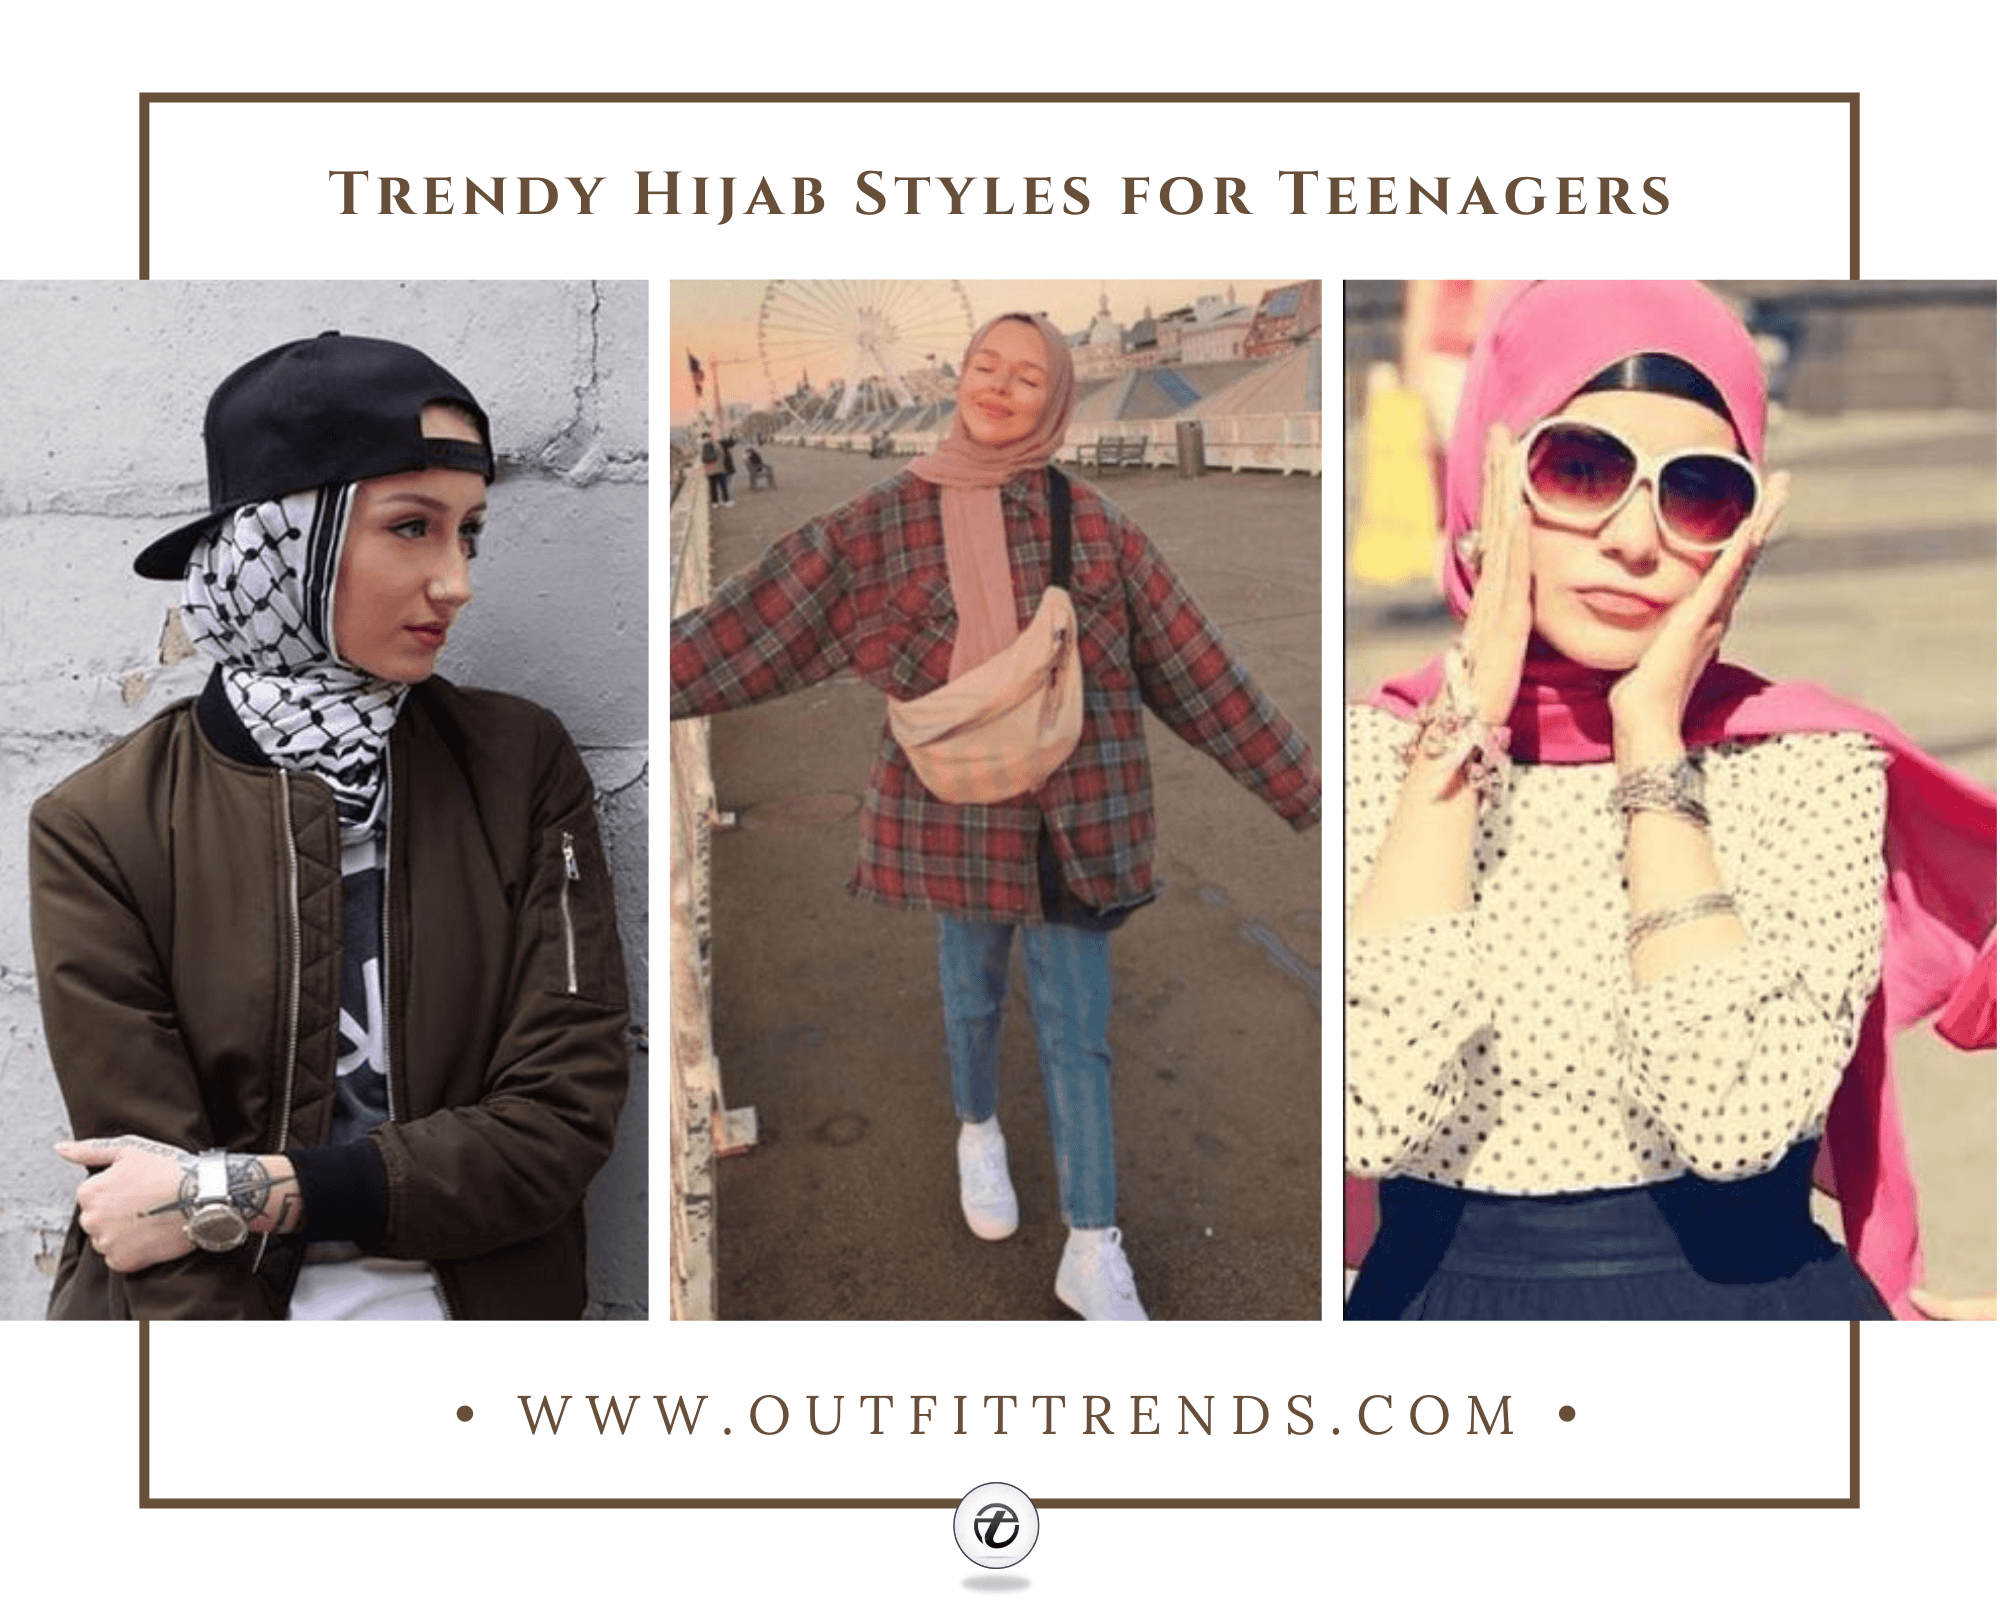 Hijab Outfits for Teenage Girls – 26 Cool Hijab Style Looks